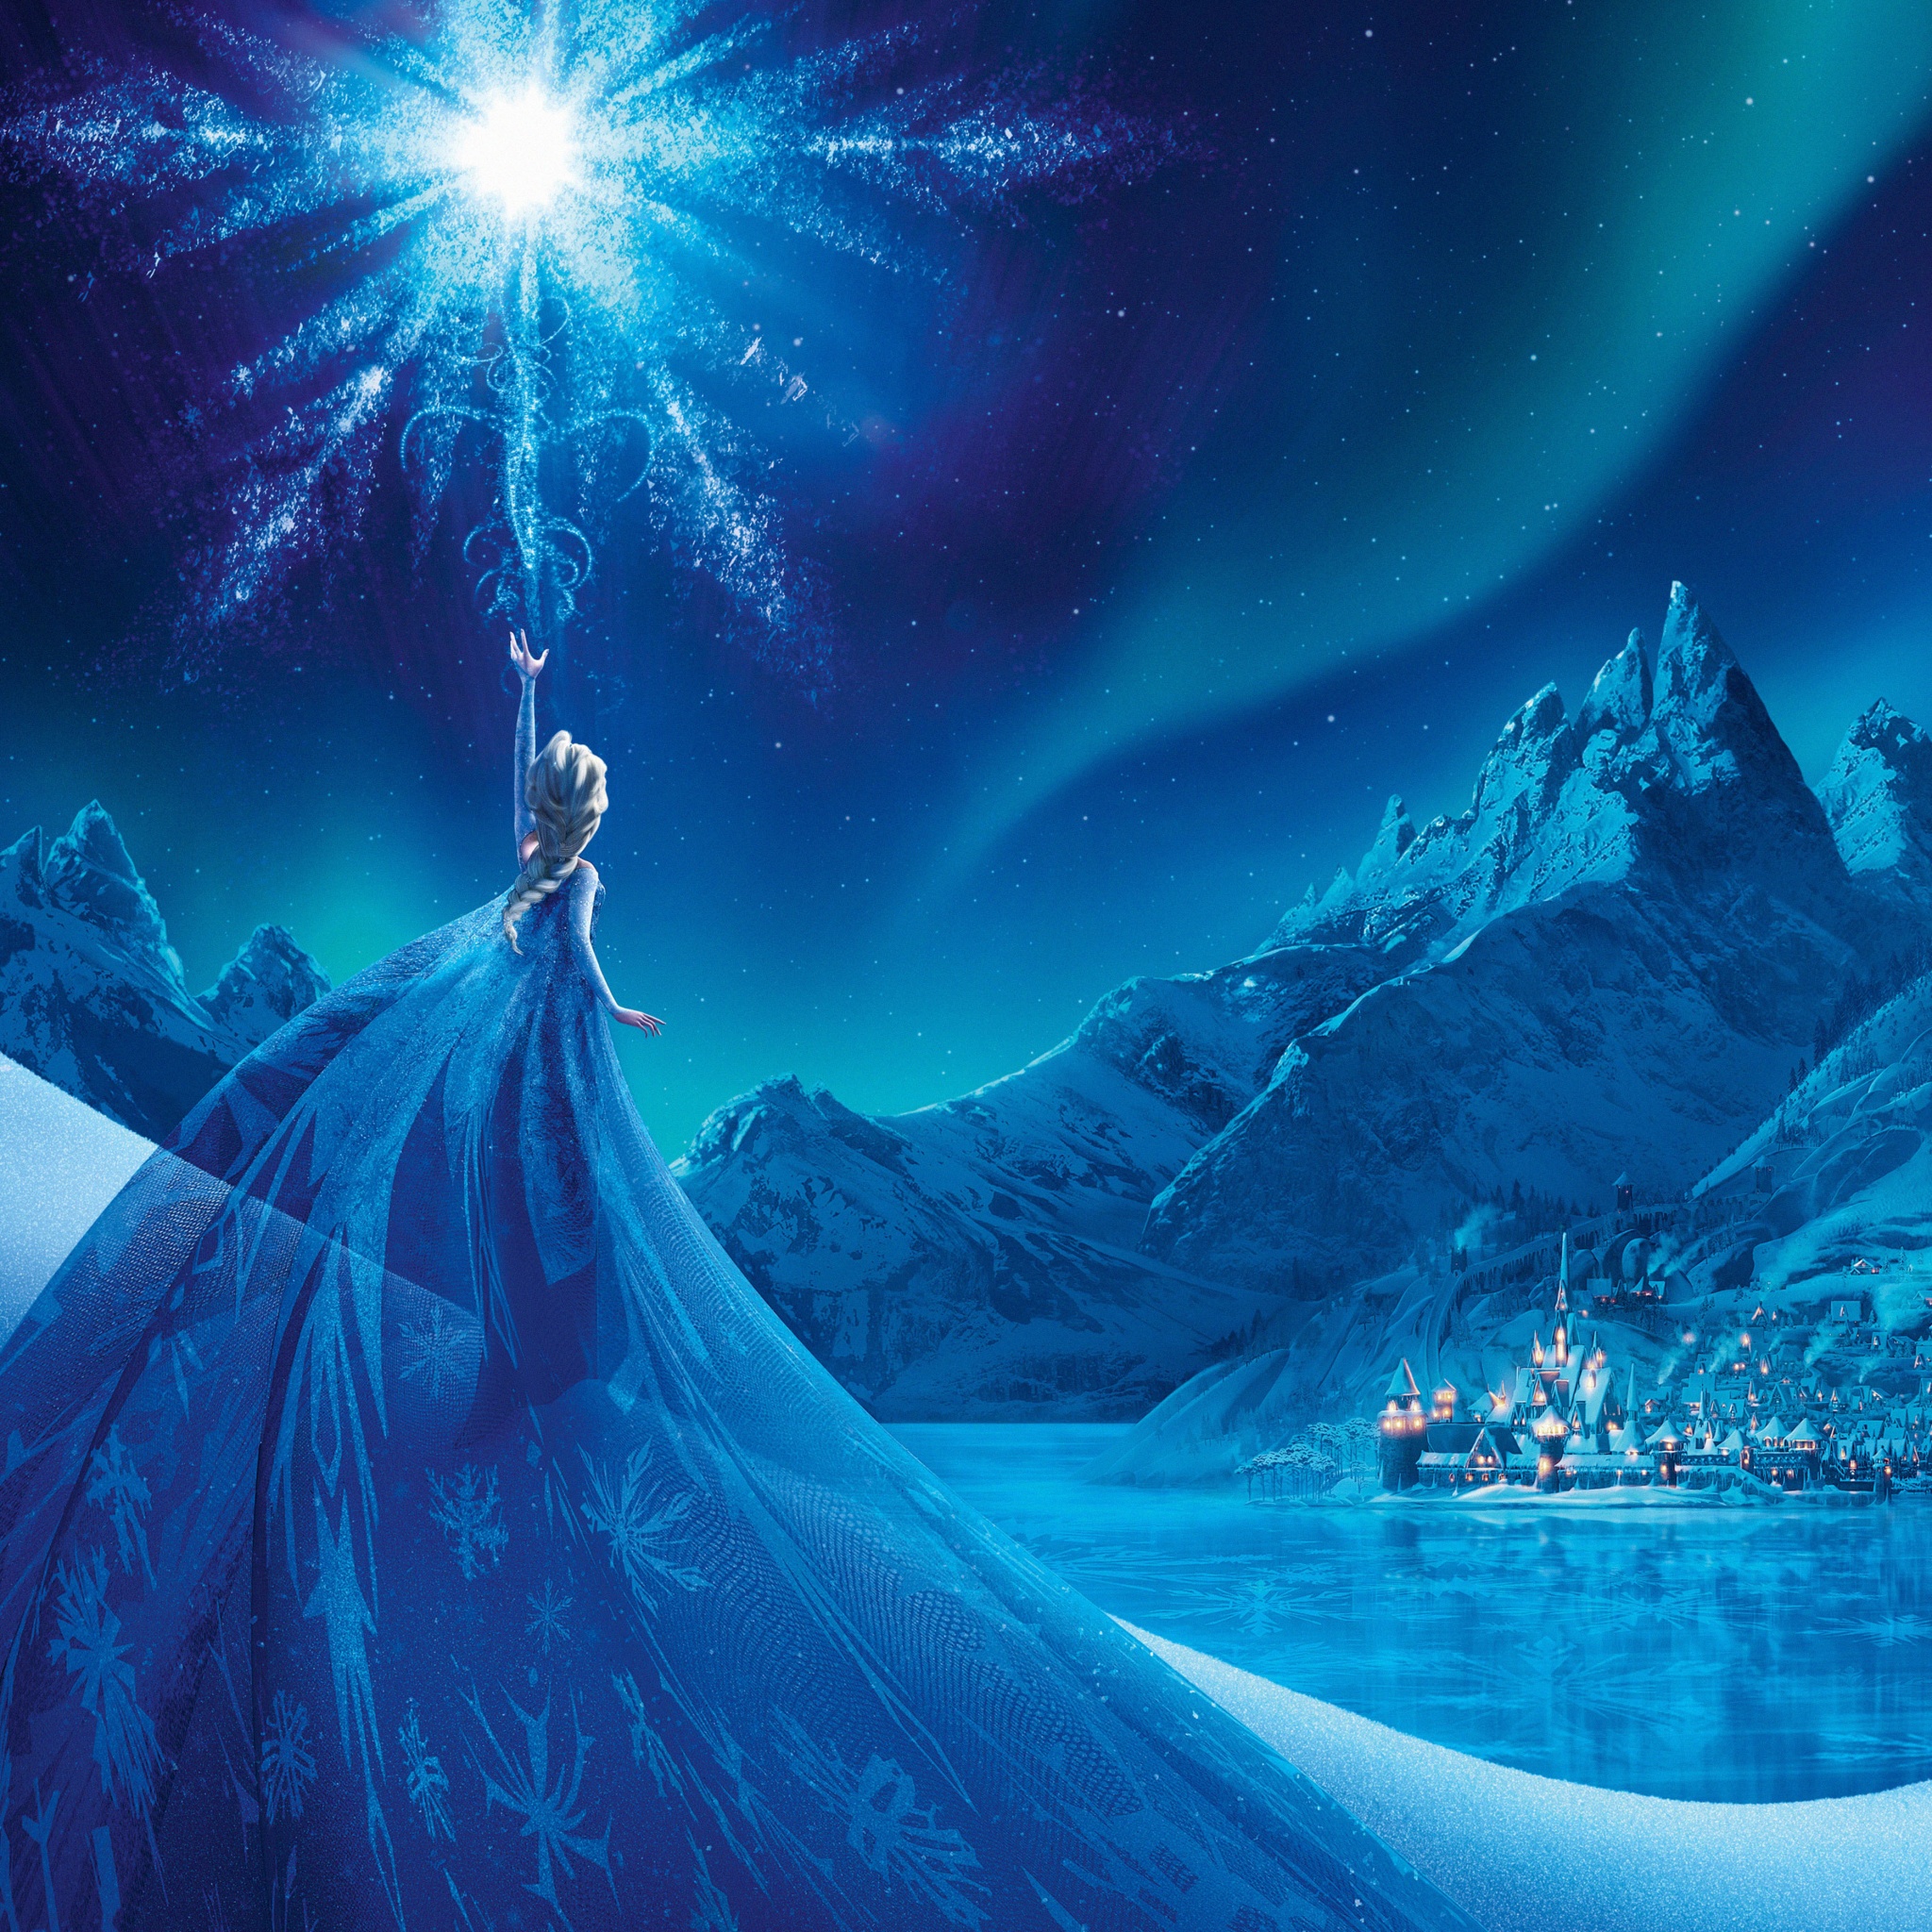 Frozen Elsa Disney Princess Wallpaper 37732282 Fanpop - Riset